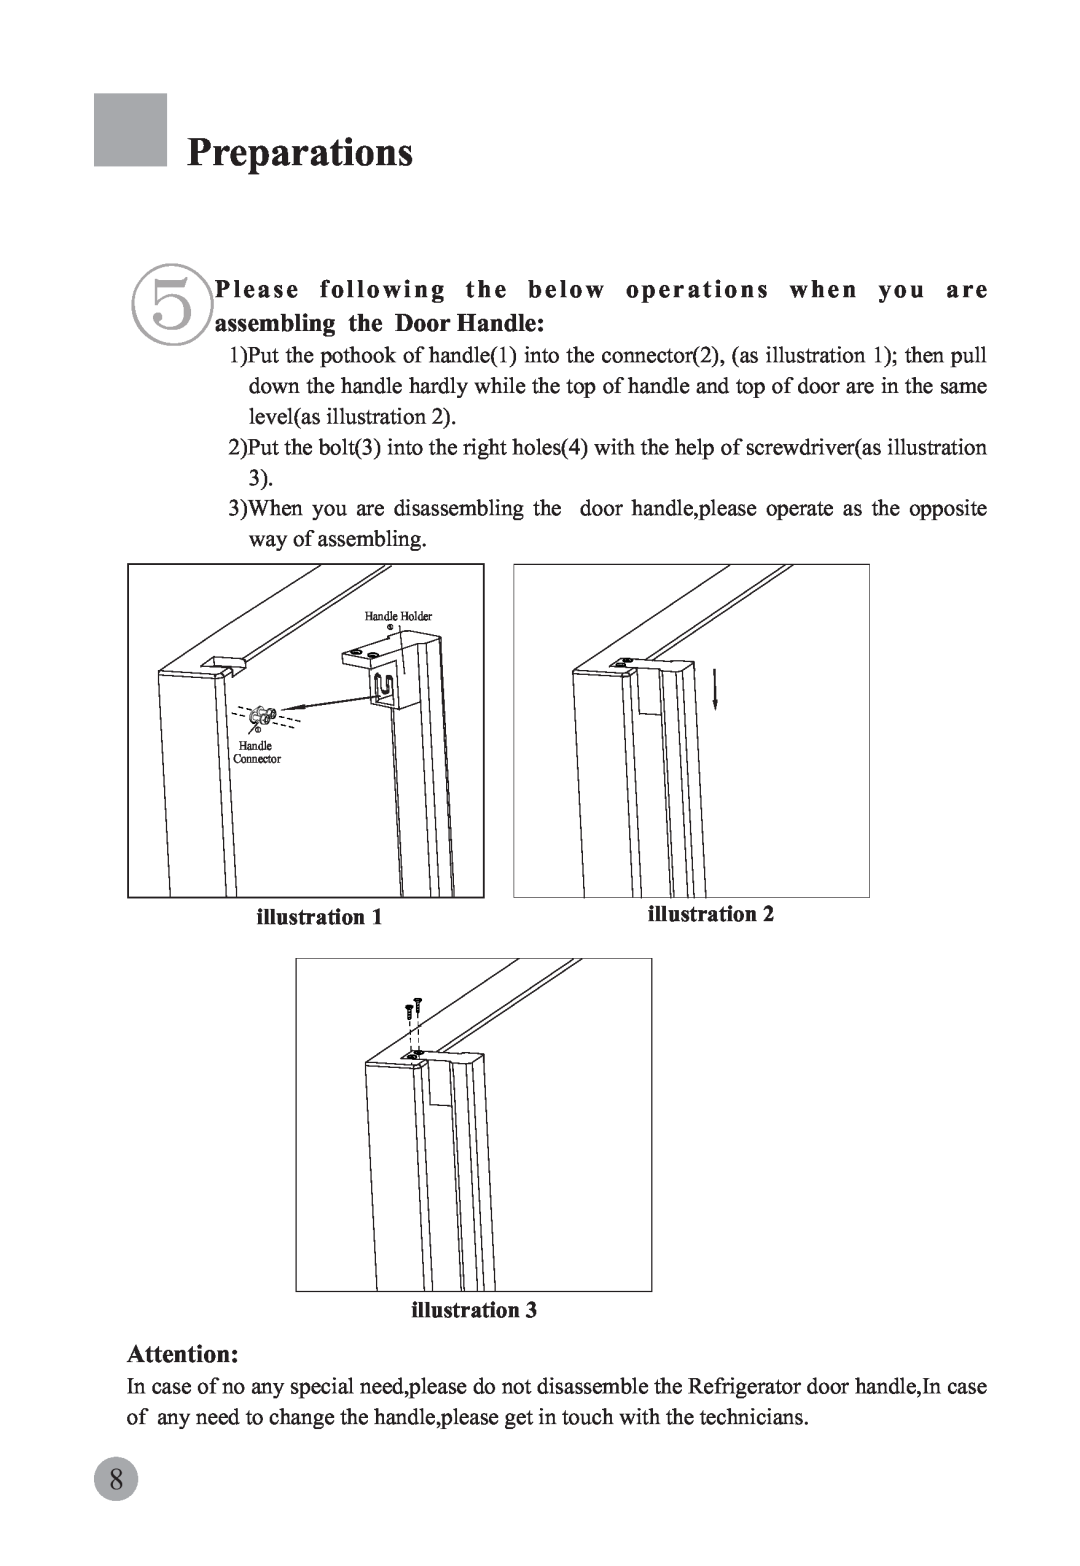 Haier HRF-663ISB2, HRF-663CJ manual assembling the Door Handle, Preparations, illustration 